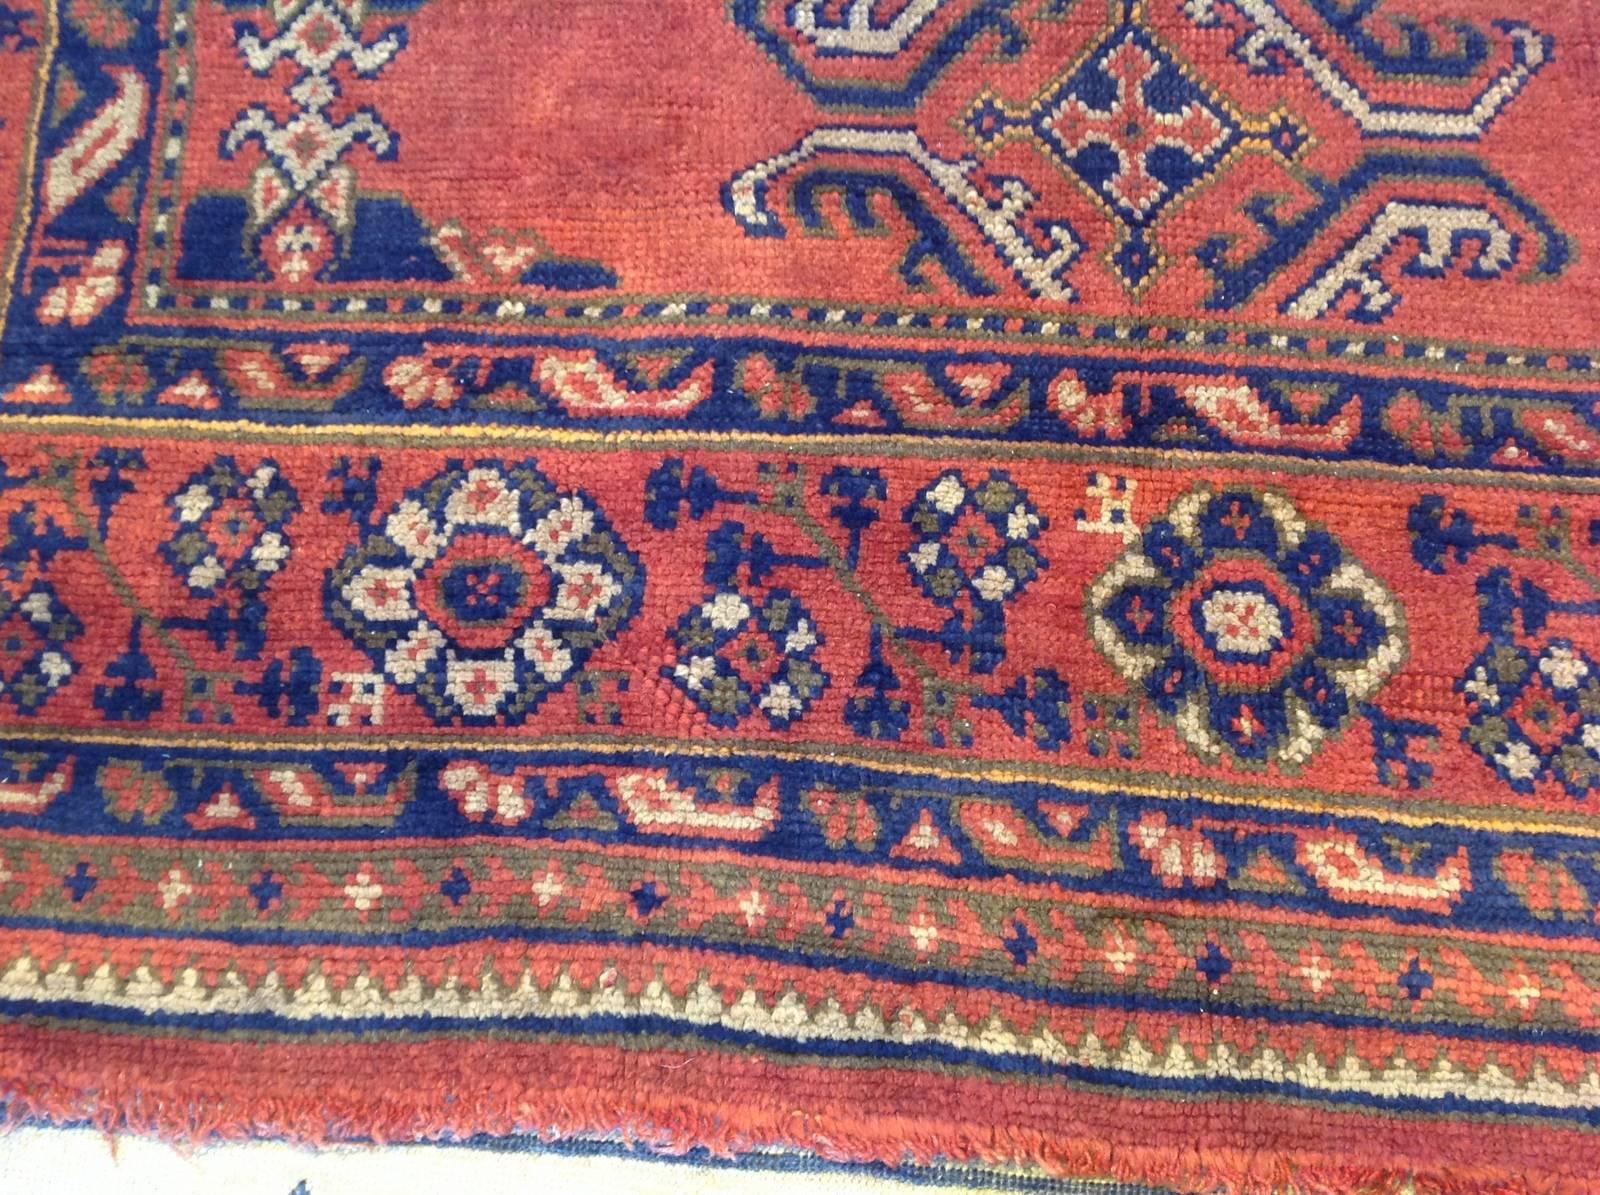 Square red antique Oushak rug.